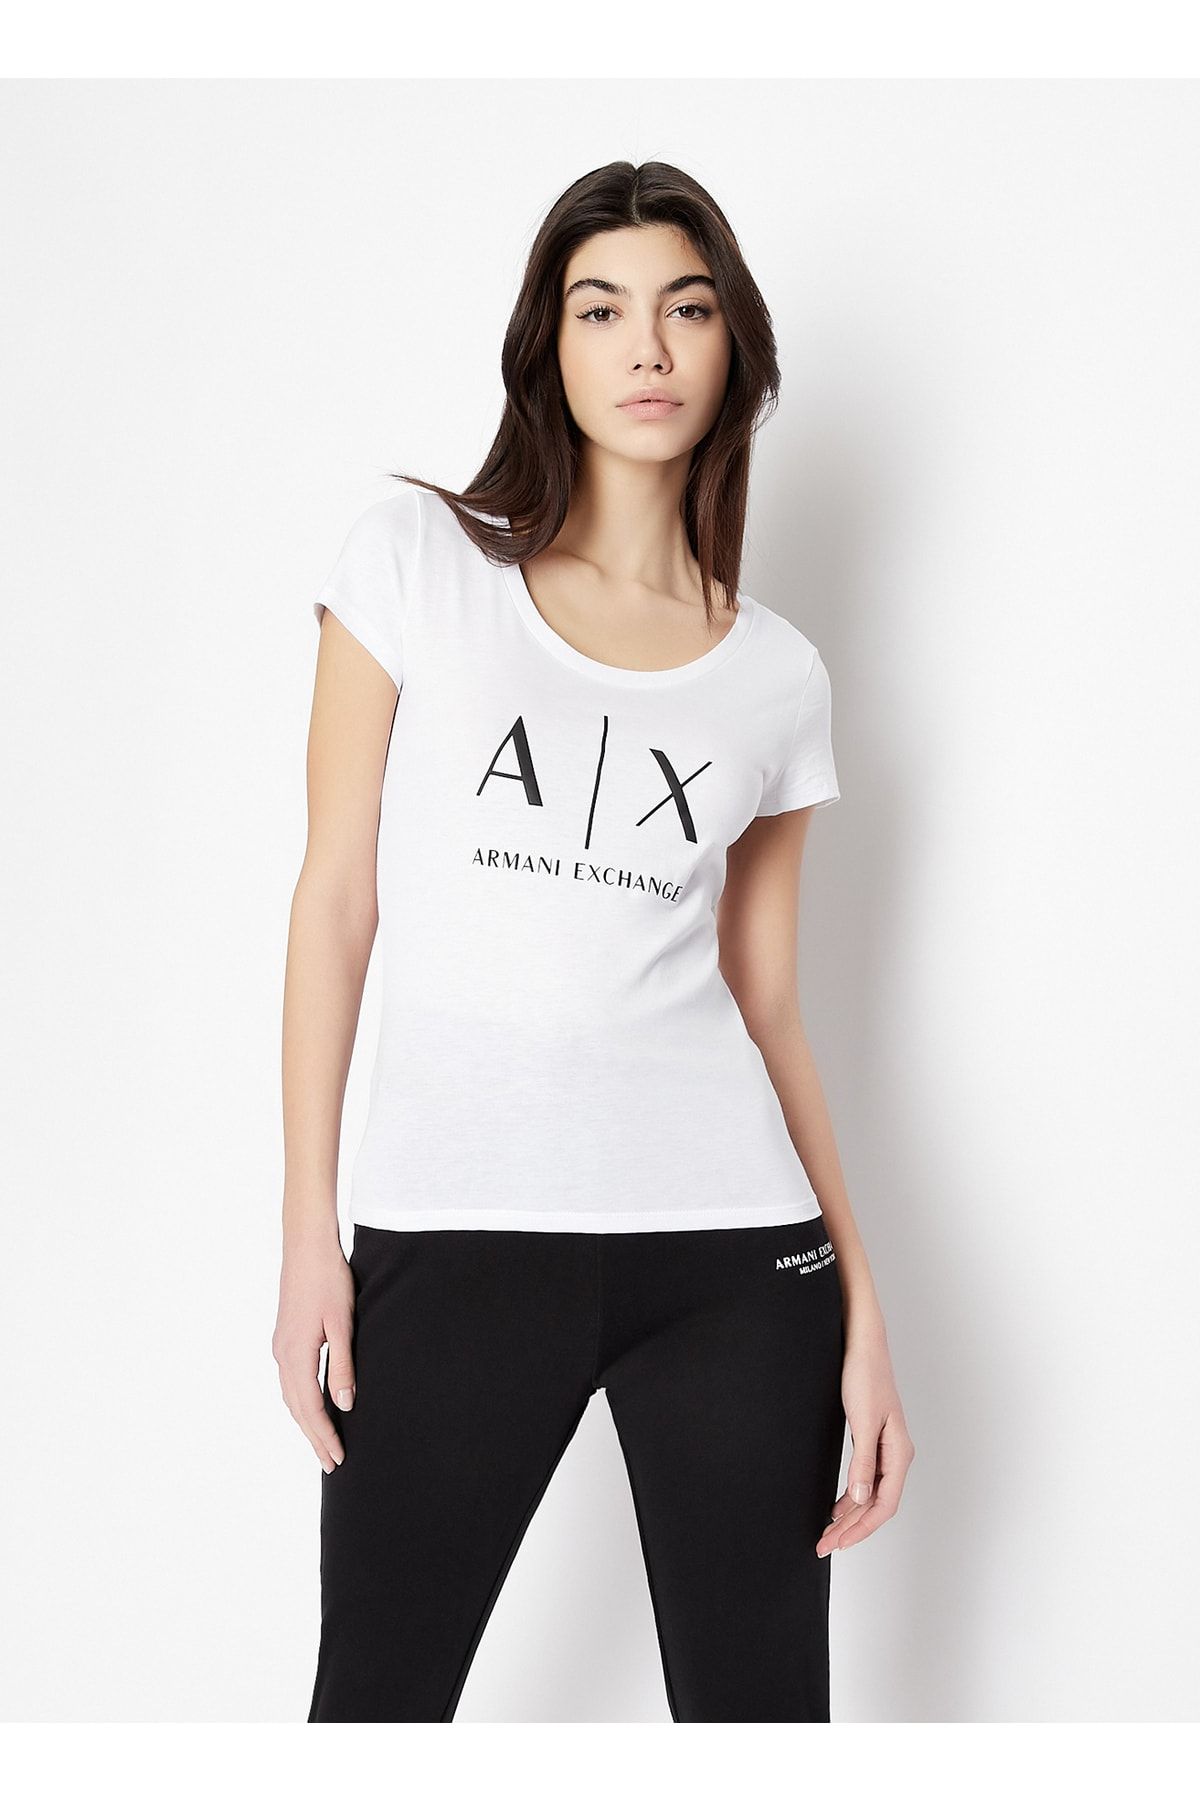 Armani Exchange T-shirt, S, Beyaz